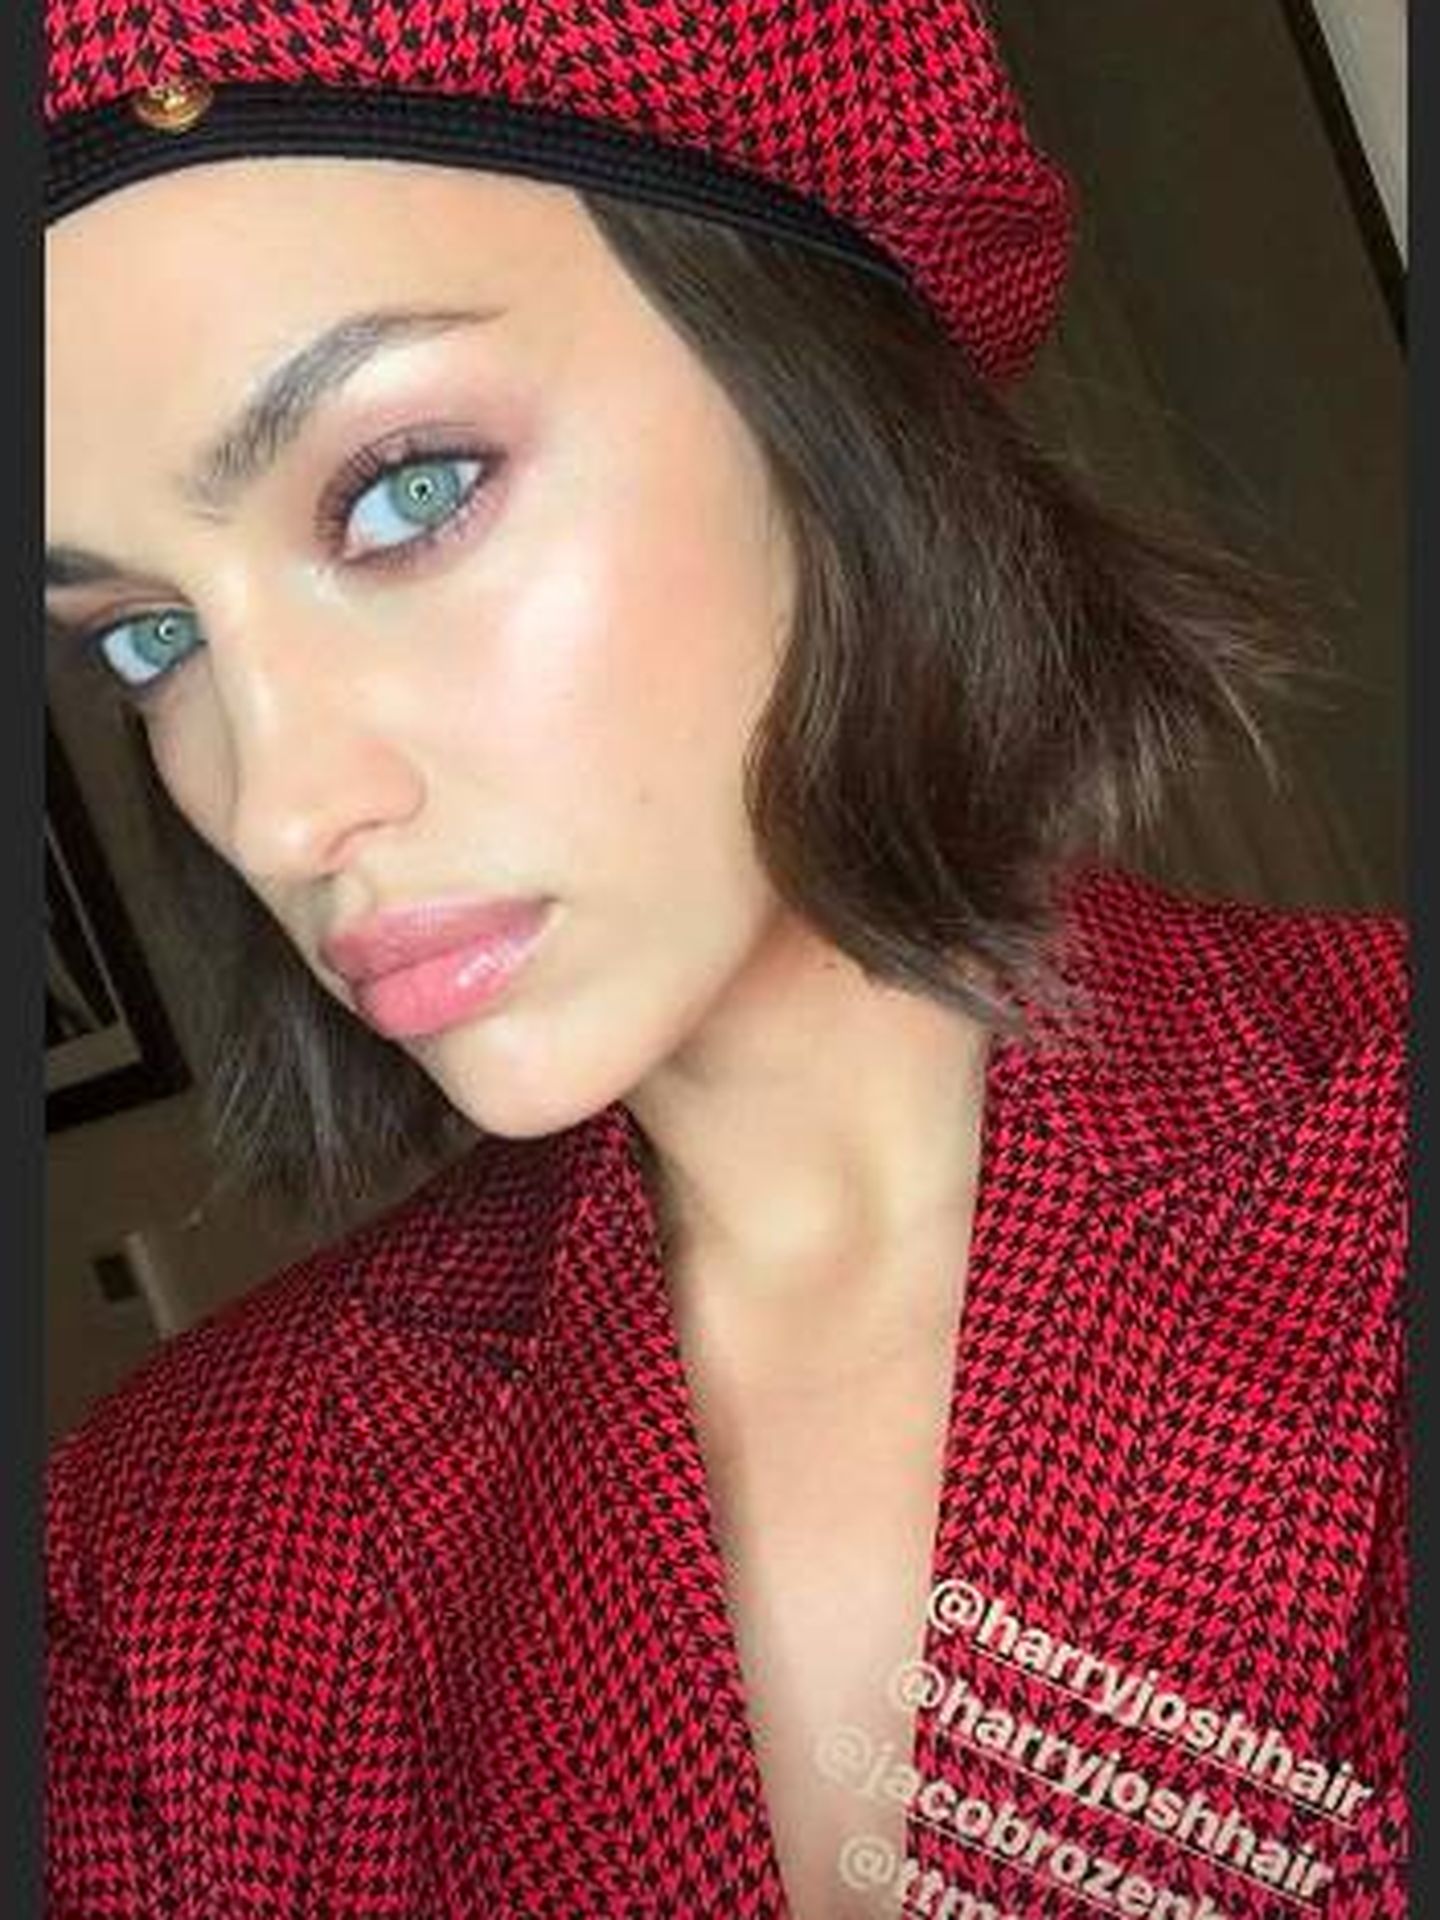 El beauty look que ha lucido Irina al detalle en uno de sus stories. (Instagram)